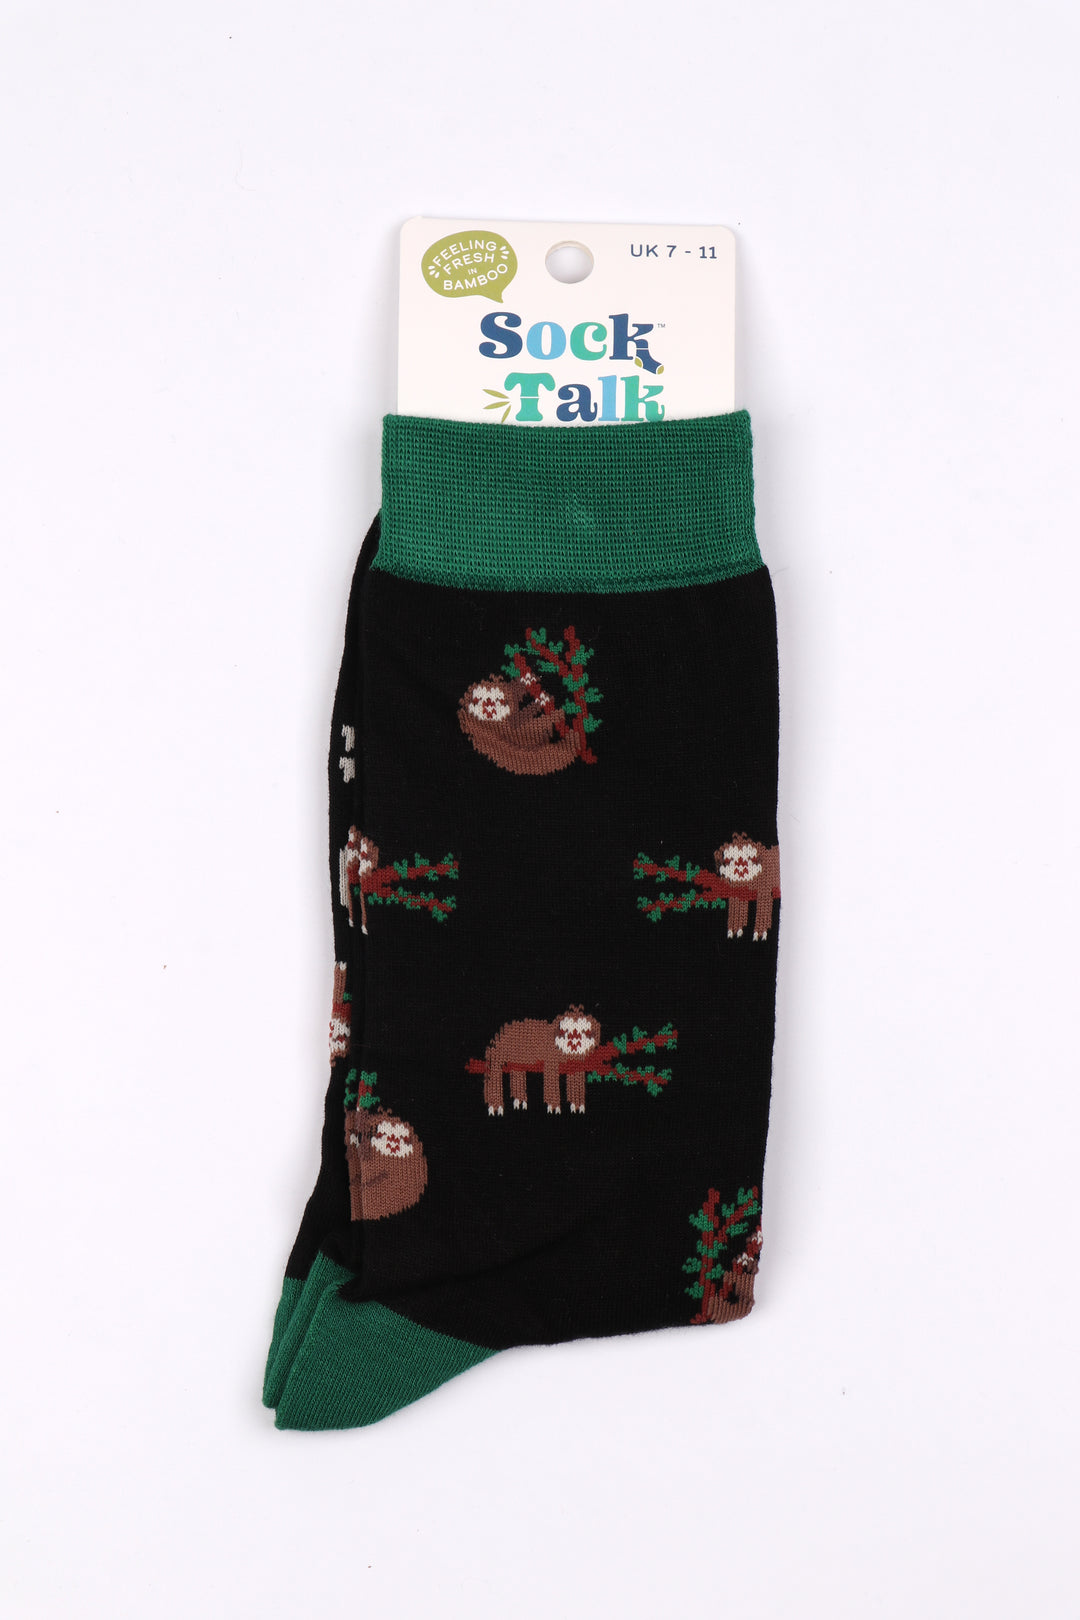 mens bamboo sloth socks uk size 7-11